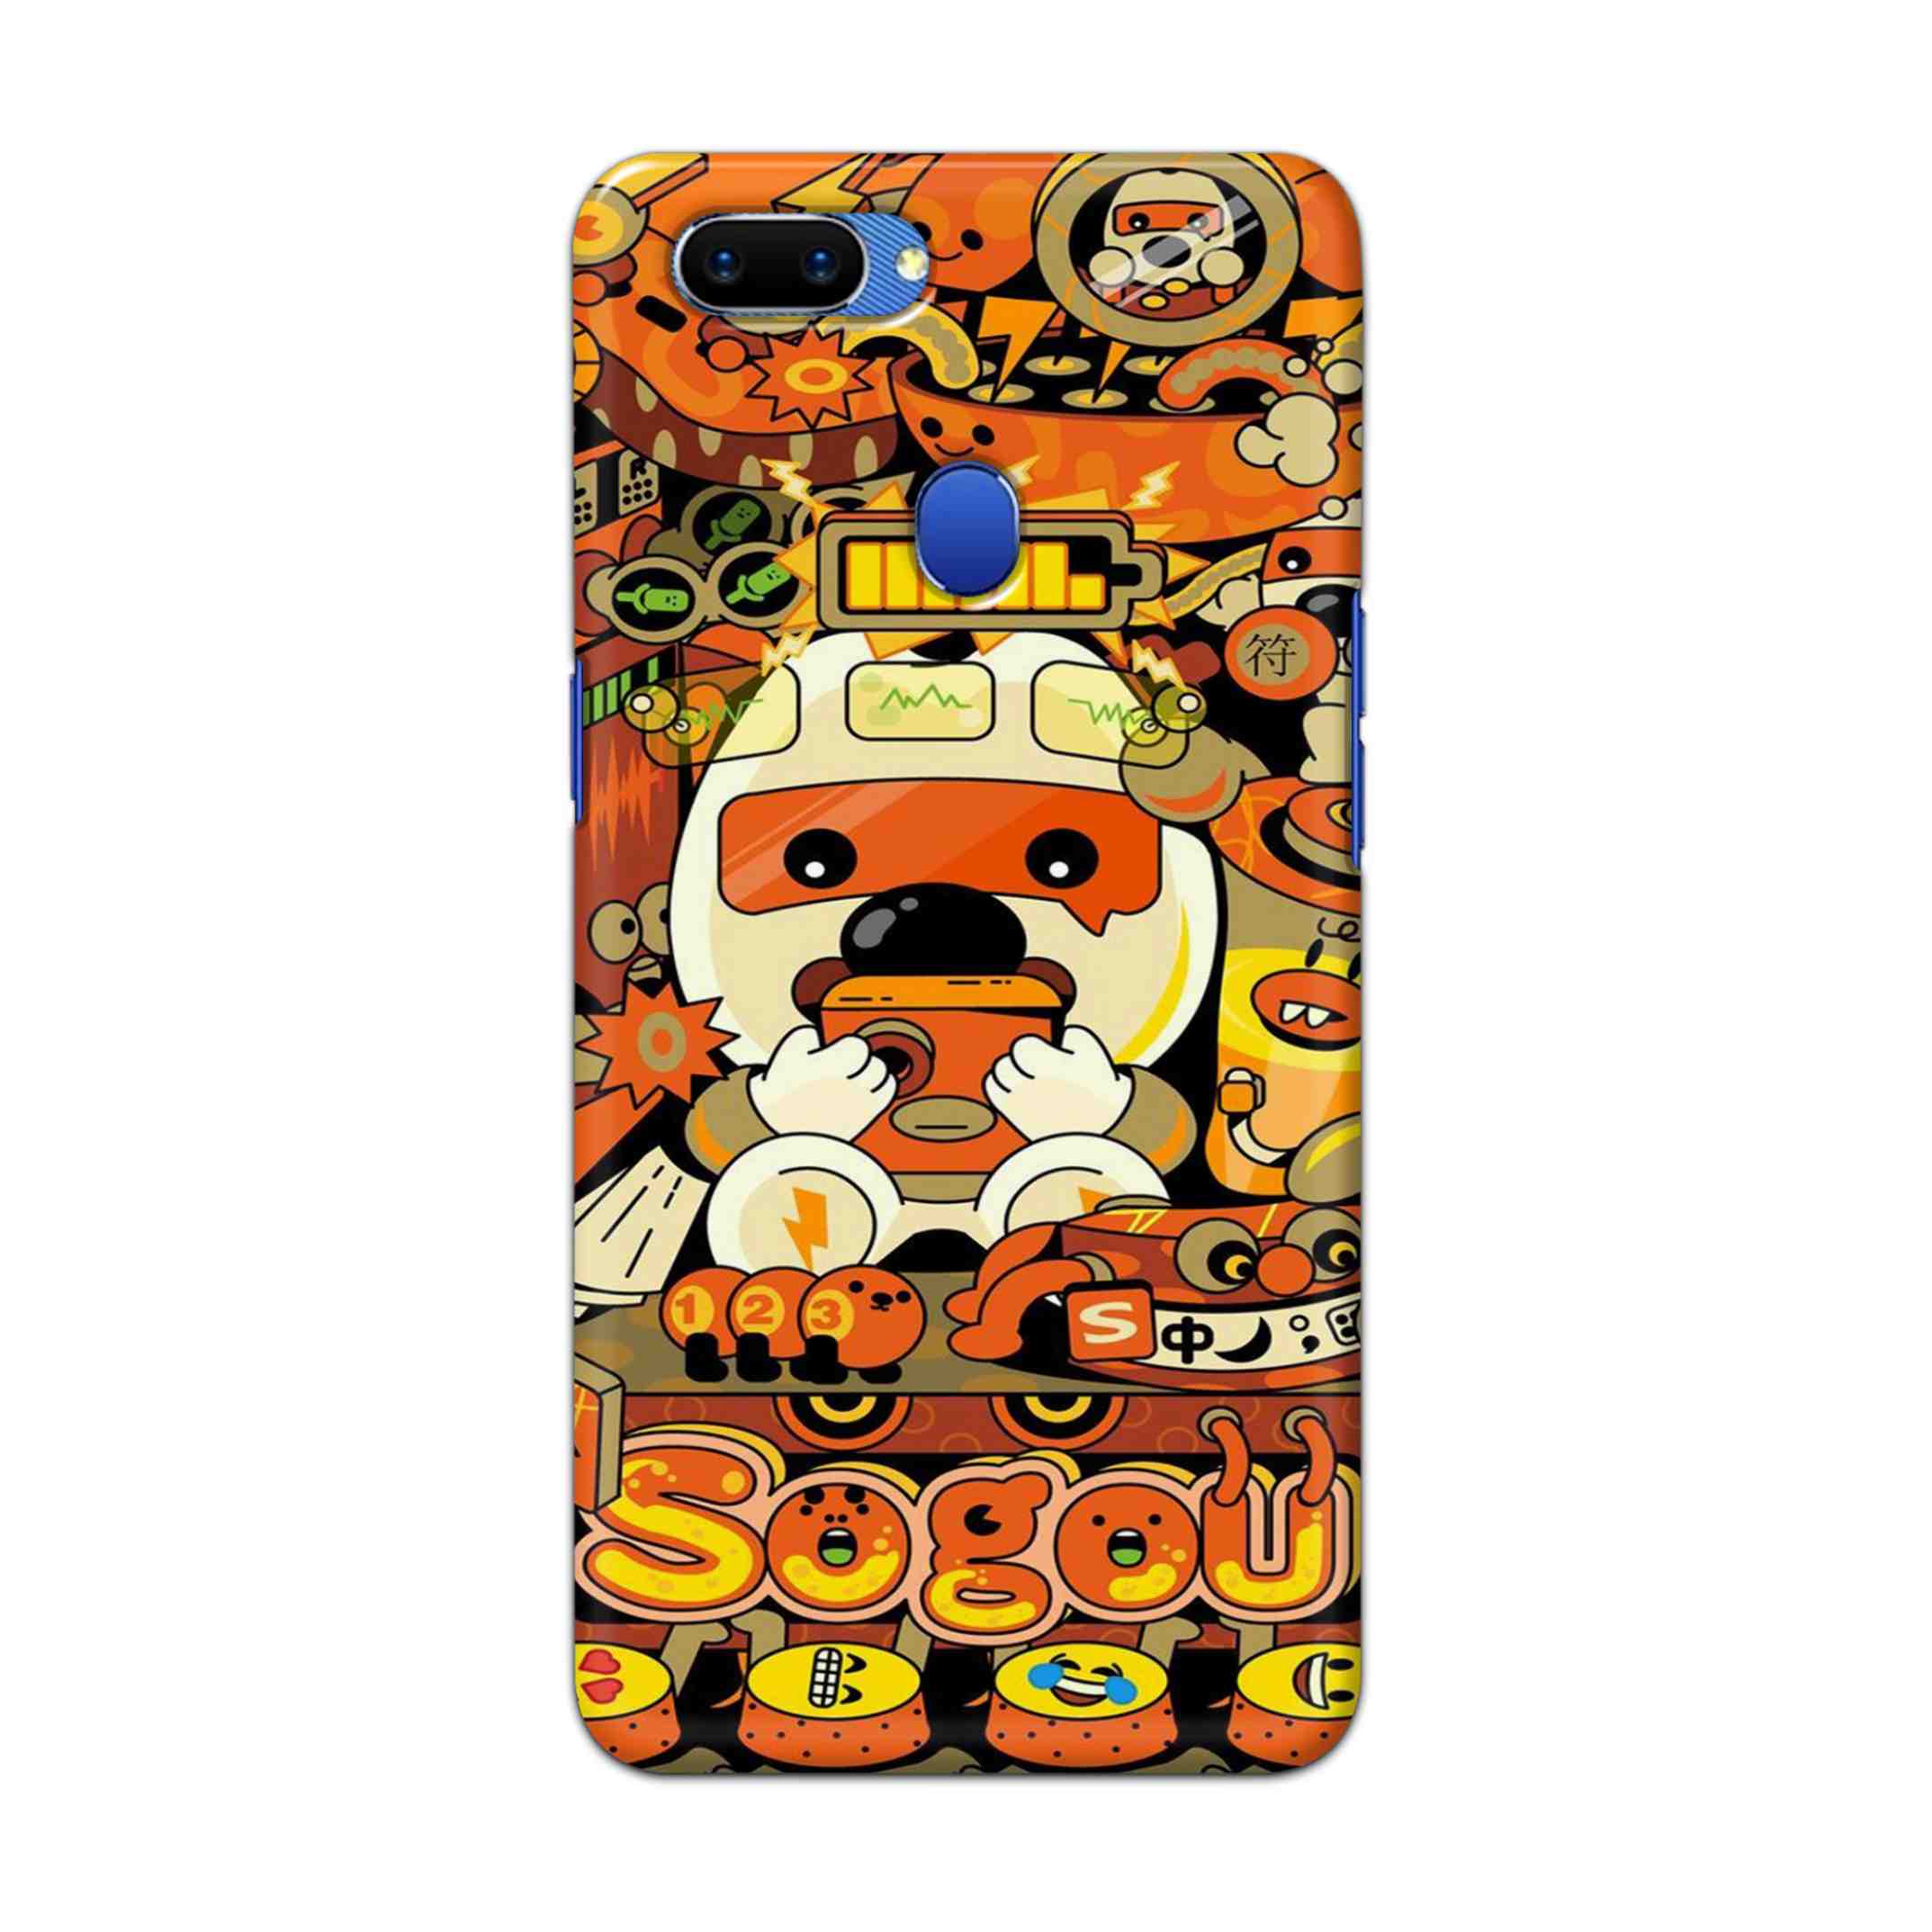 Buy Sogou Hard Back Mobile Phone Case Cover For Oppo A5 Online